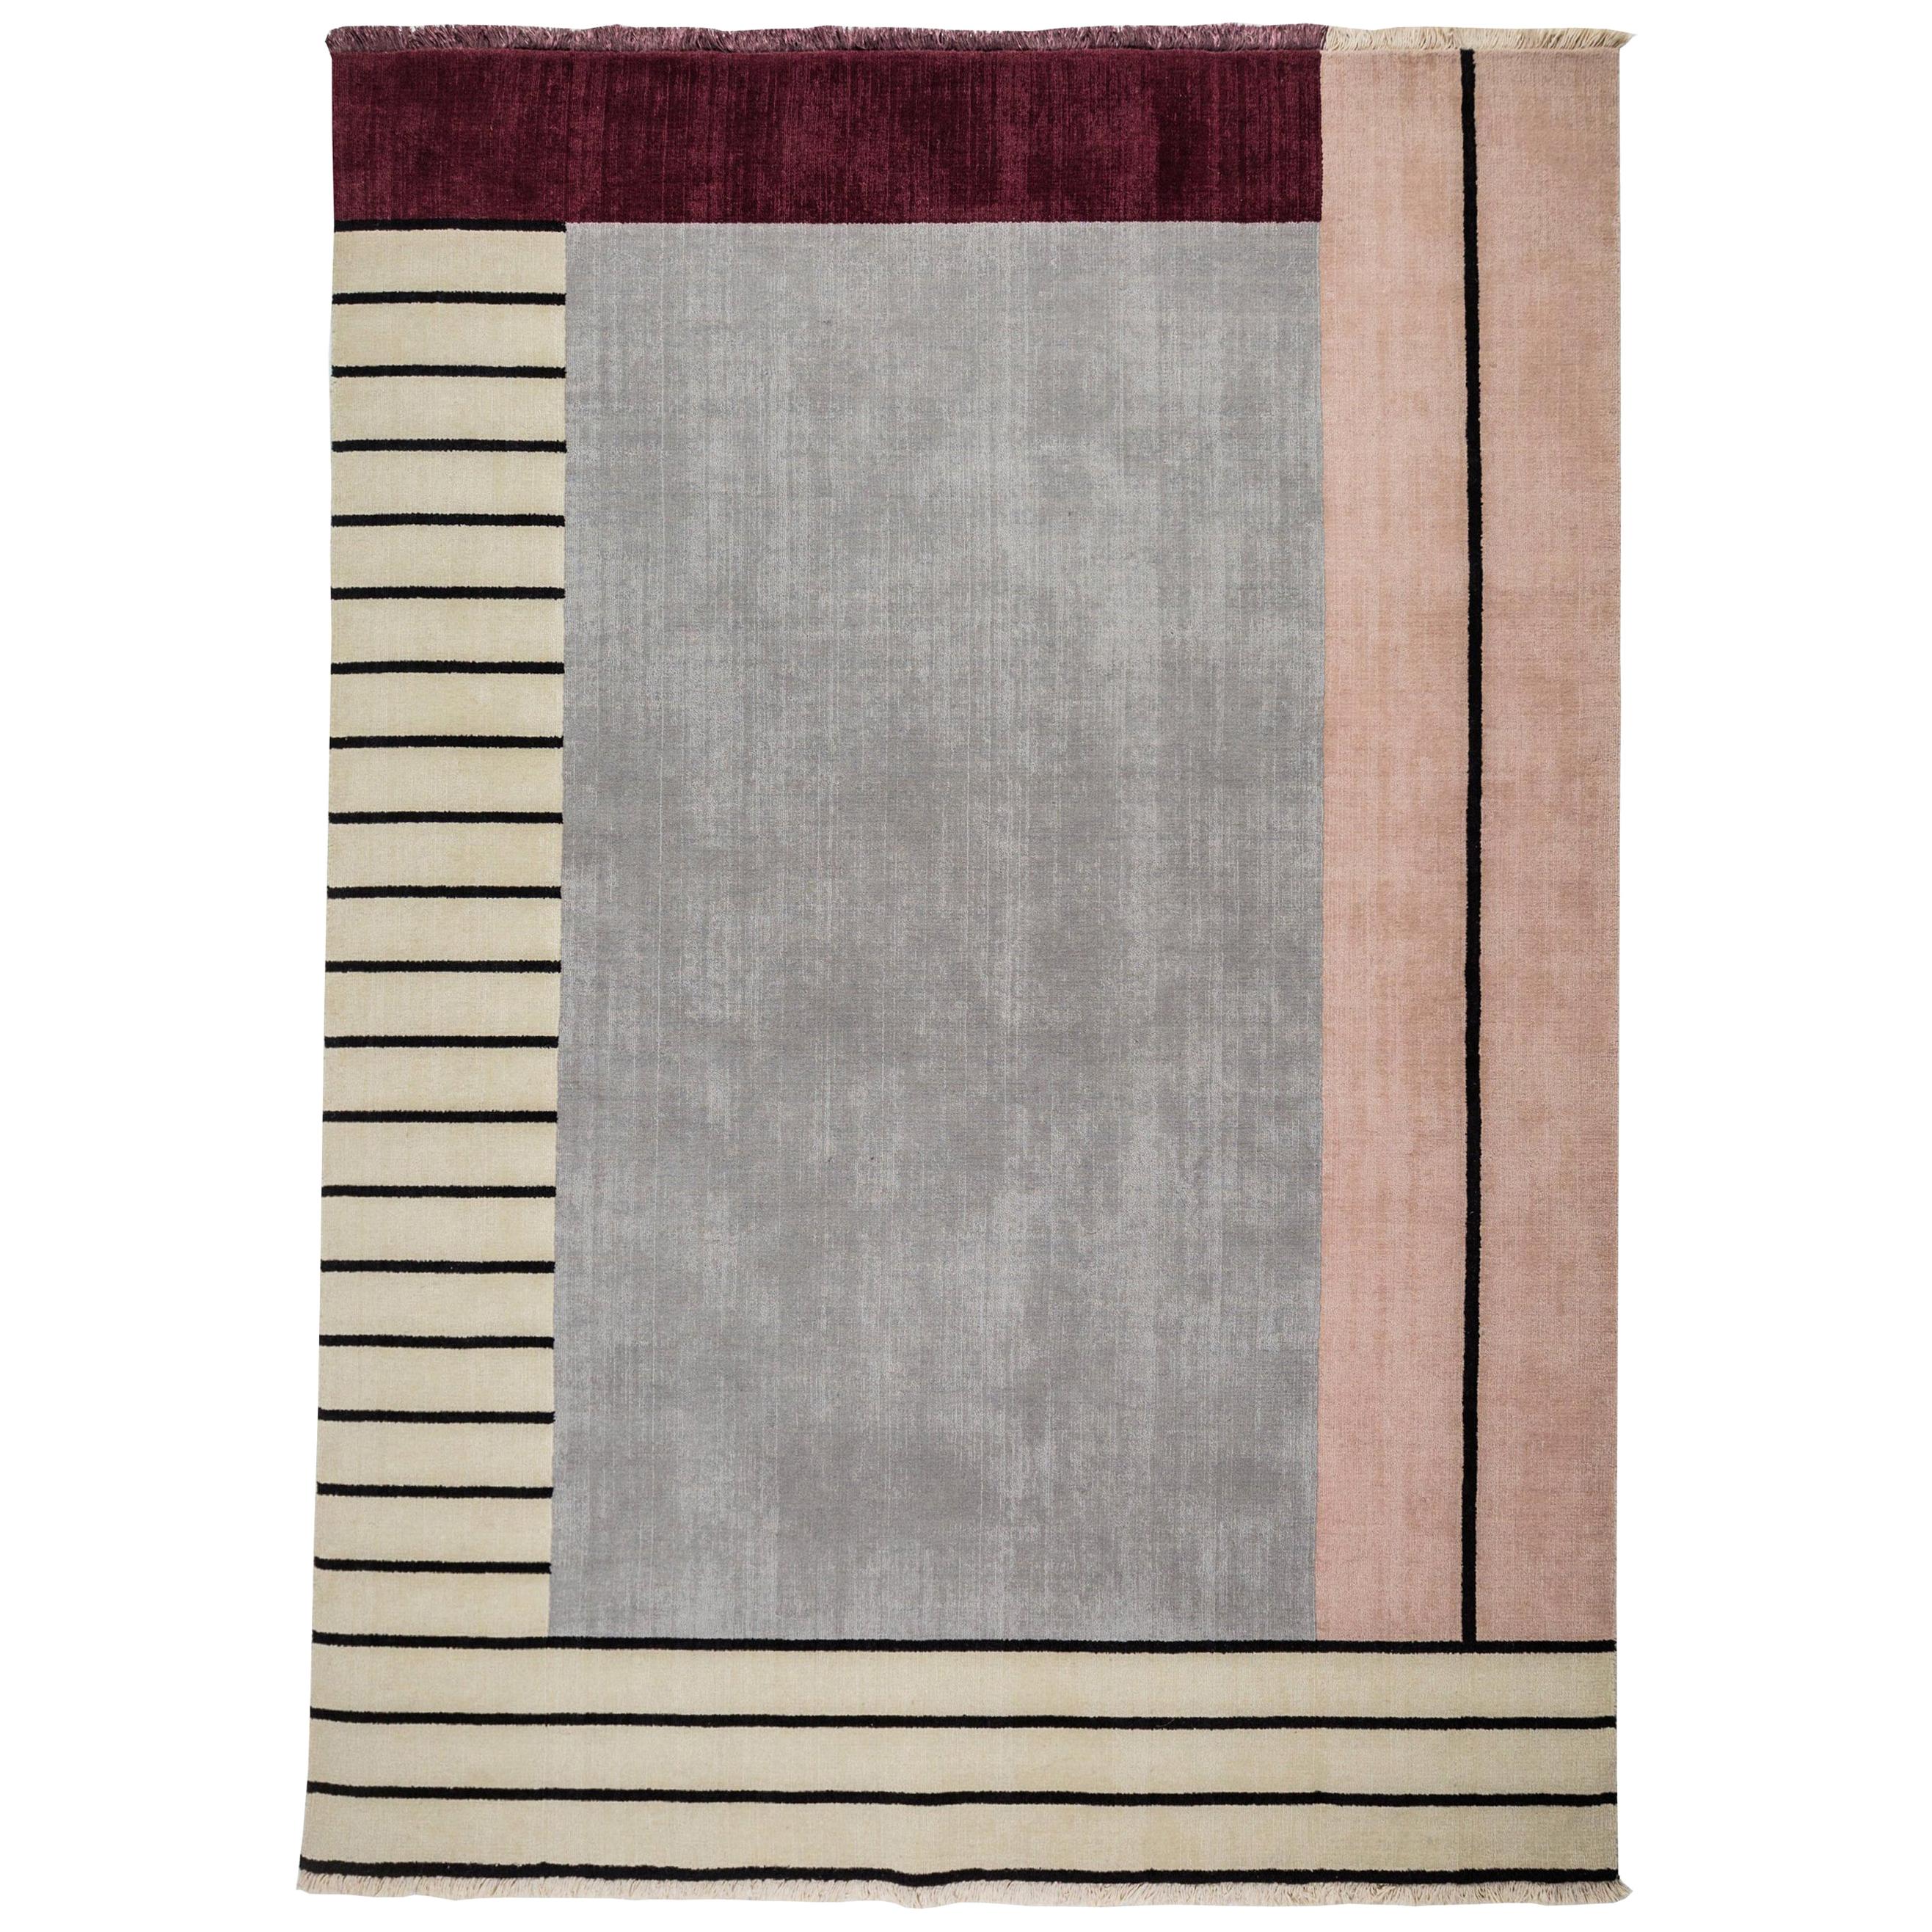  Rug Walkway - Pink Wool Modern Geometric Grey Maroon Beige Stripes Box Carpet